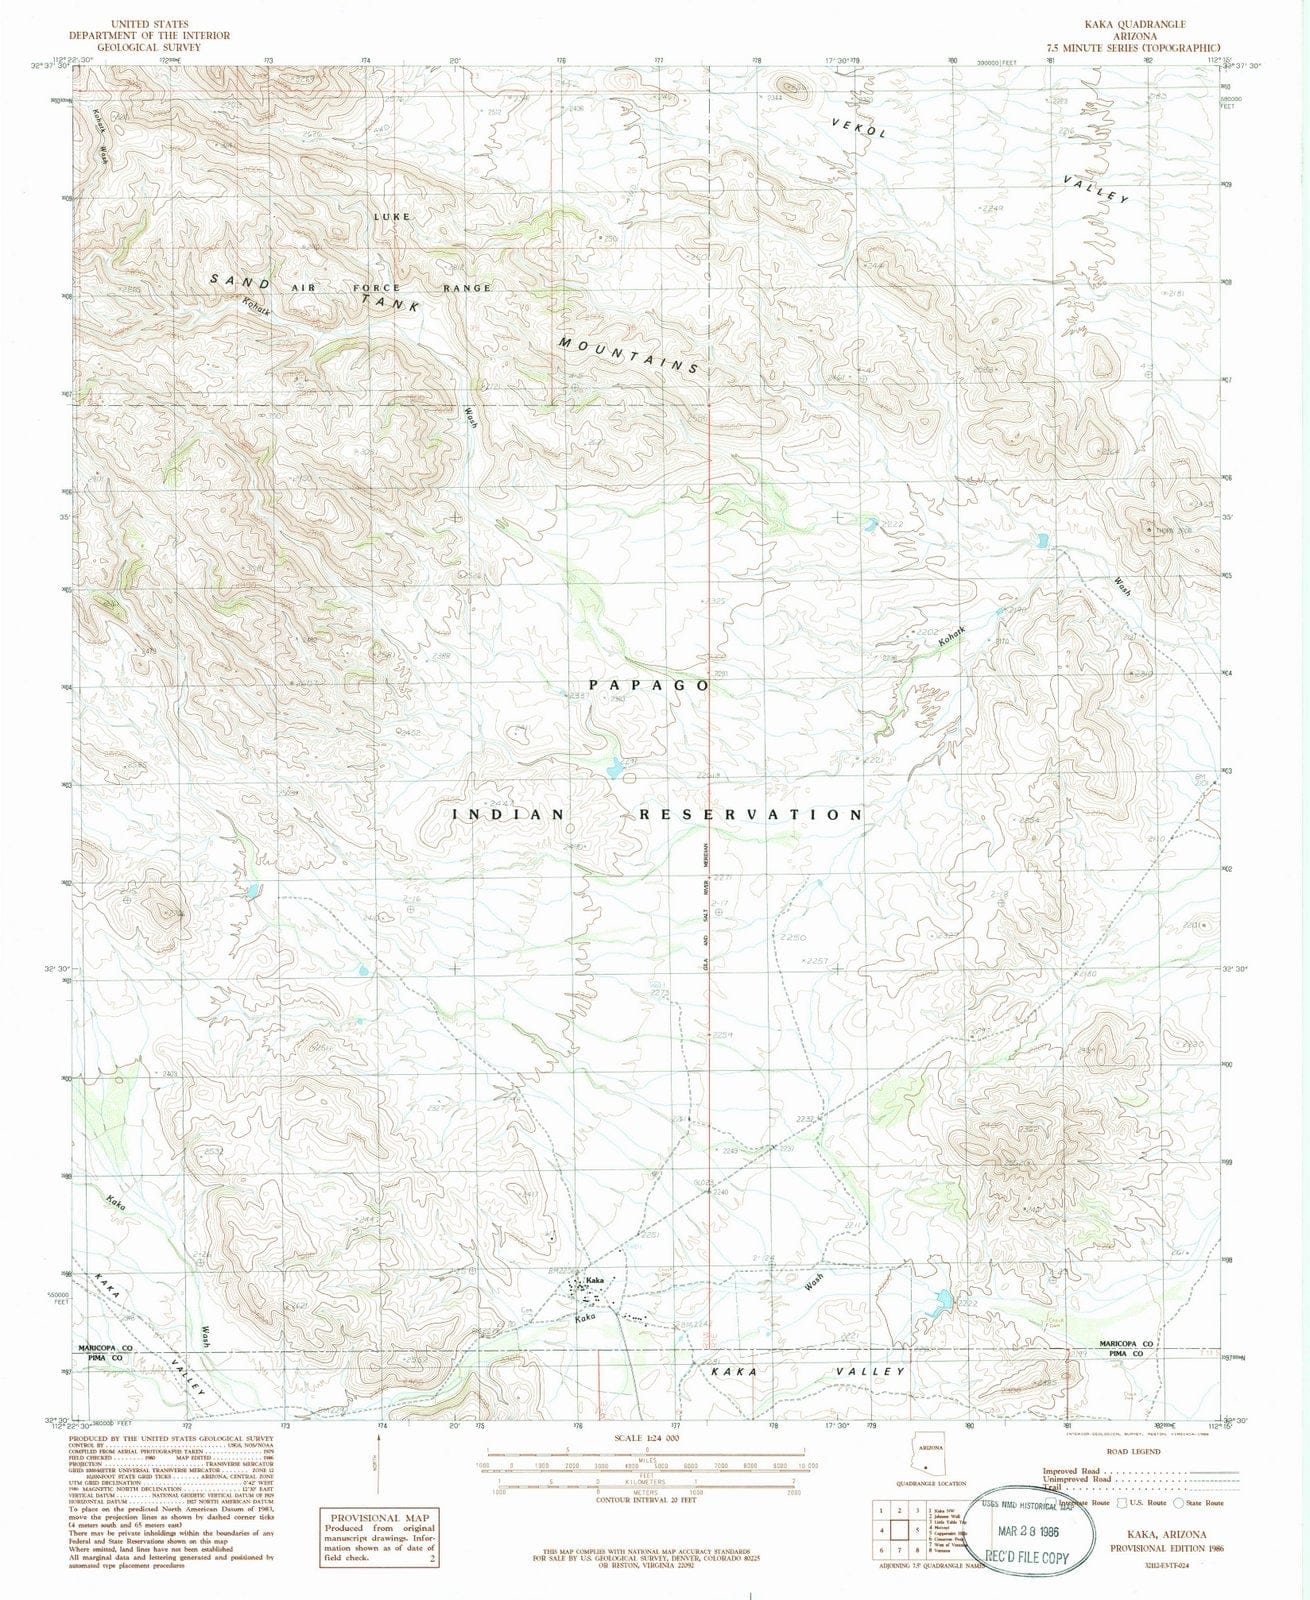 1986 Kaka, AZ - Arizona - USGS Topographic Map v2